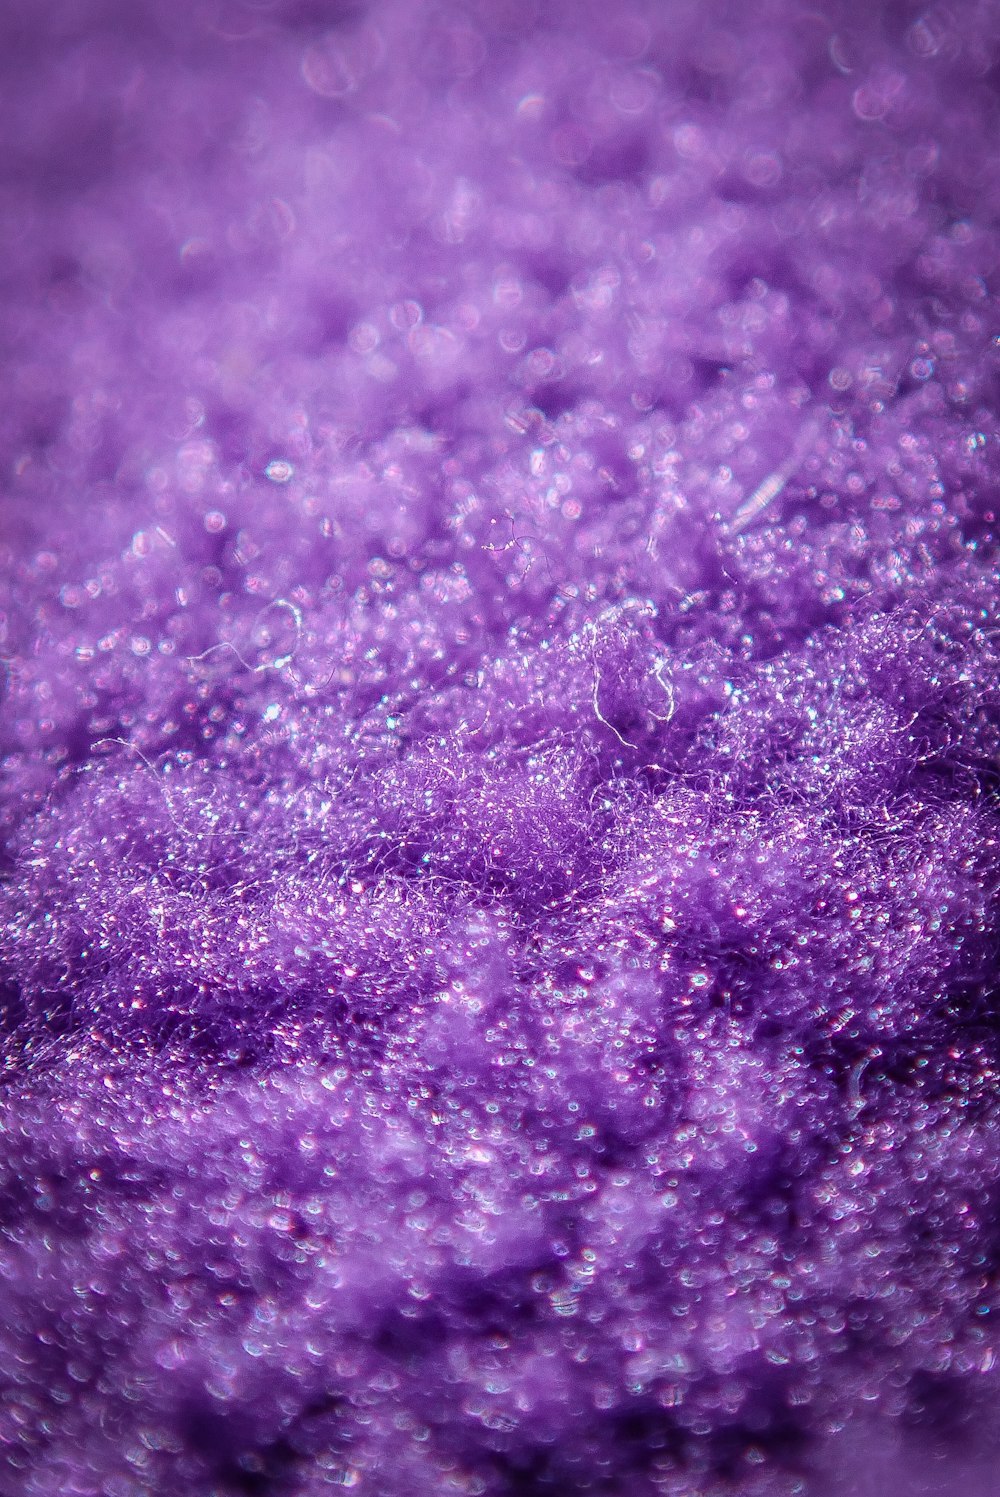 Purple Light Pictures Download Free Images On Unsplash